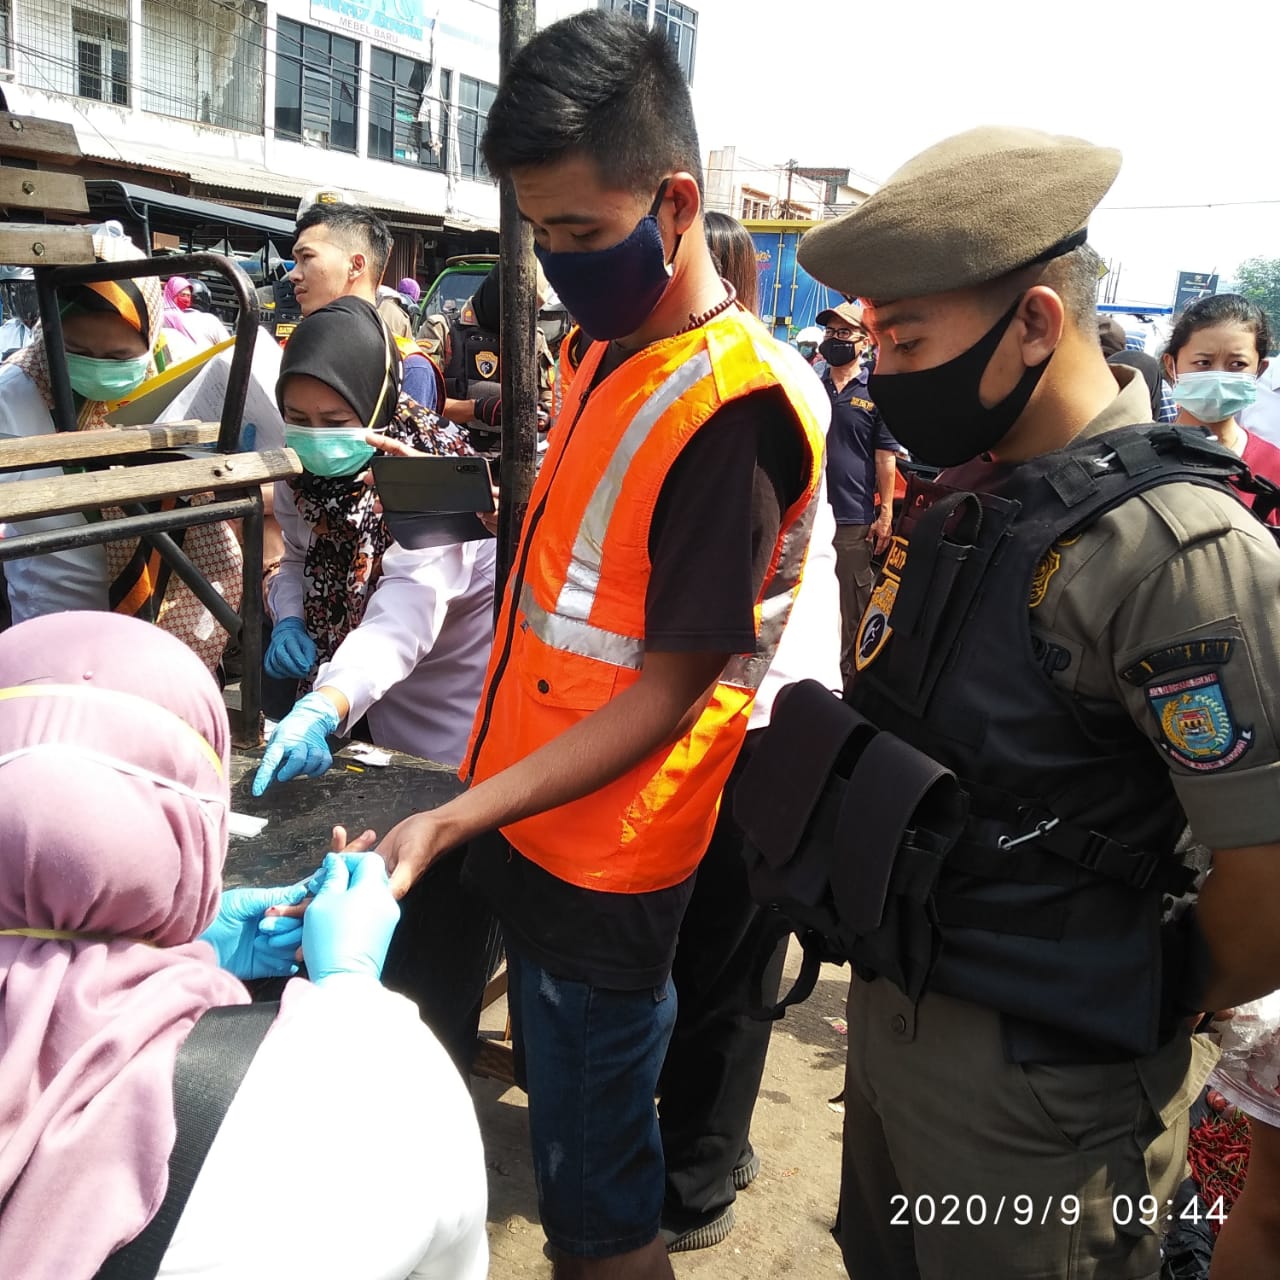 Pelanggar PSBB di Tangsel yang tidak mengenakan masker di sanksi membersihkan sampah yang ada di Pasar Serpong, Tangerang Selatan